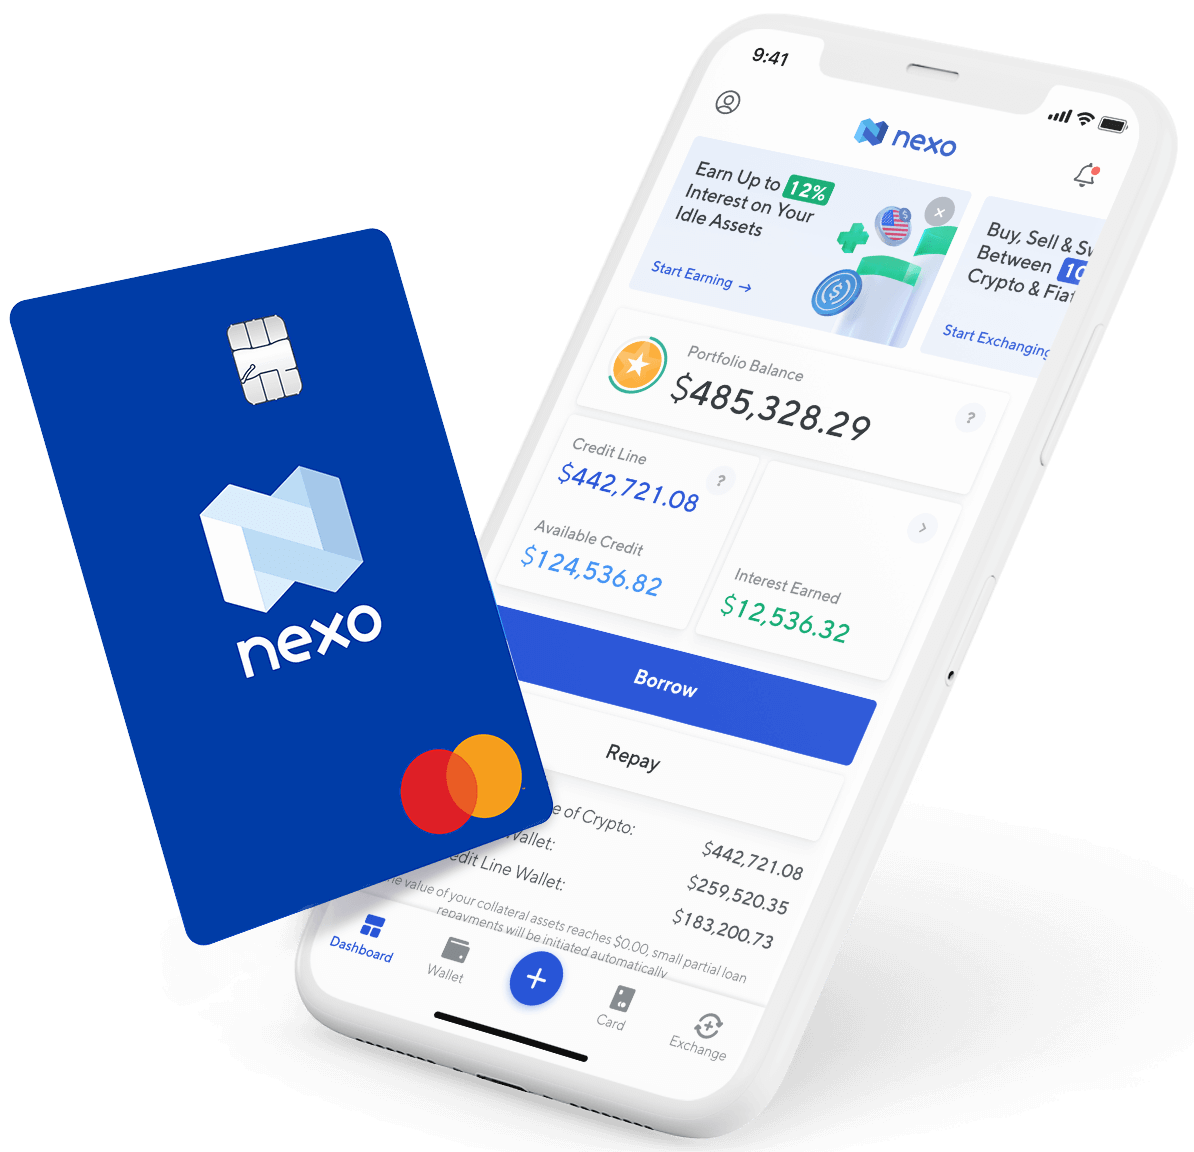 Nexo trading platform and debit card